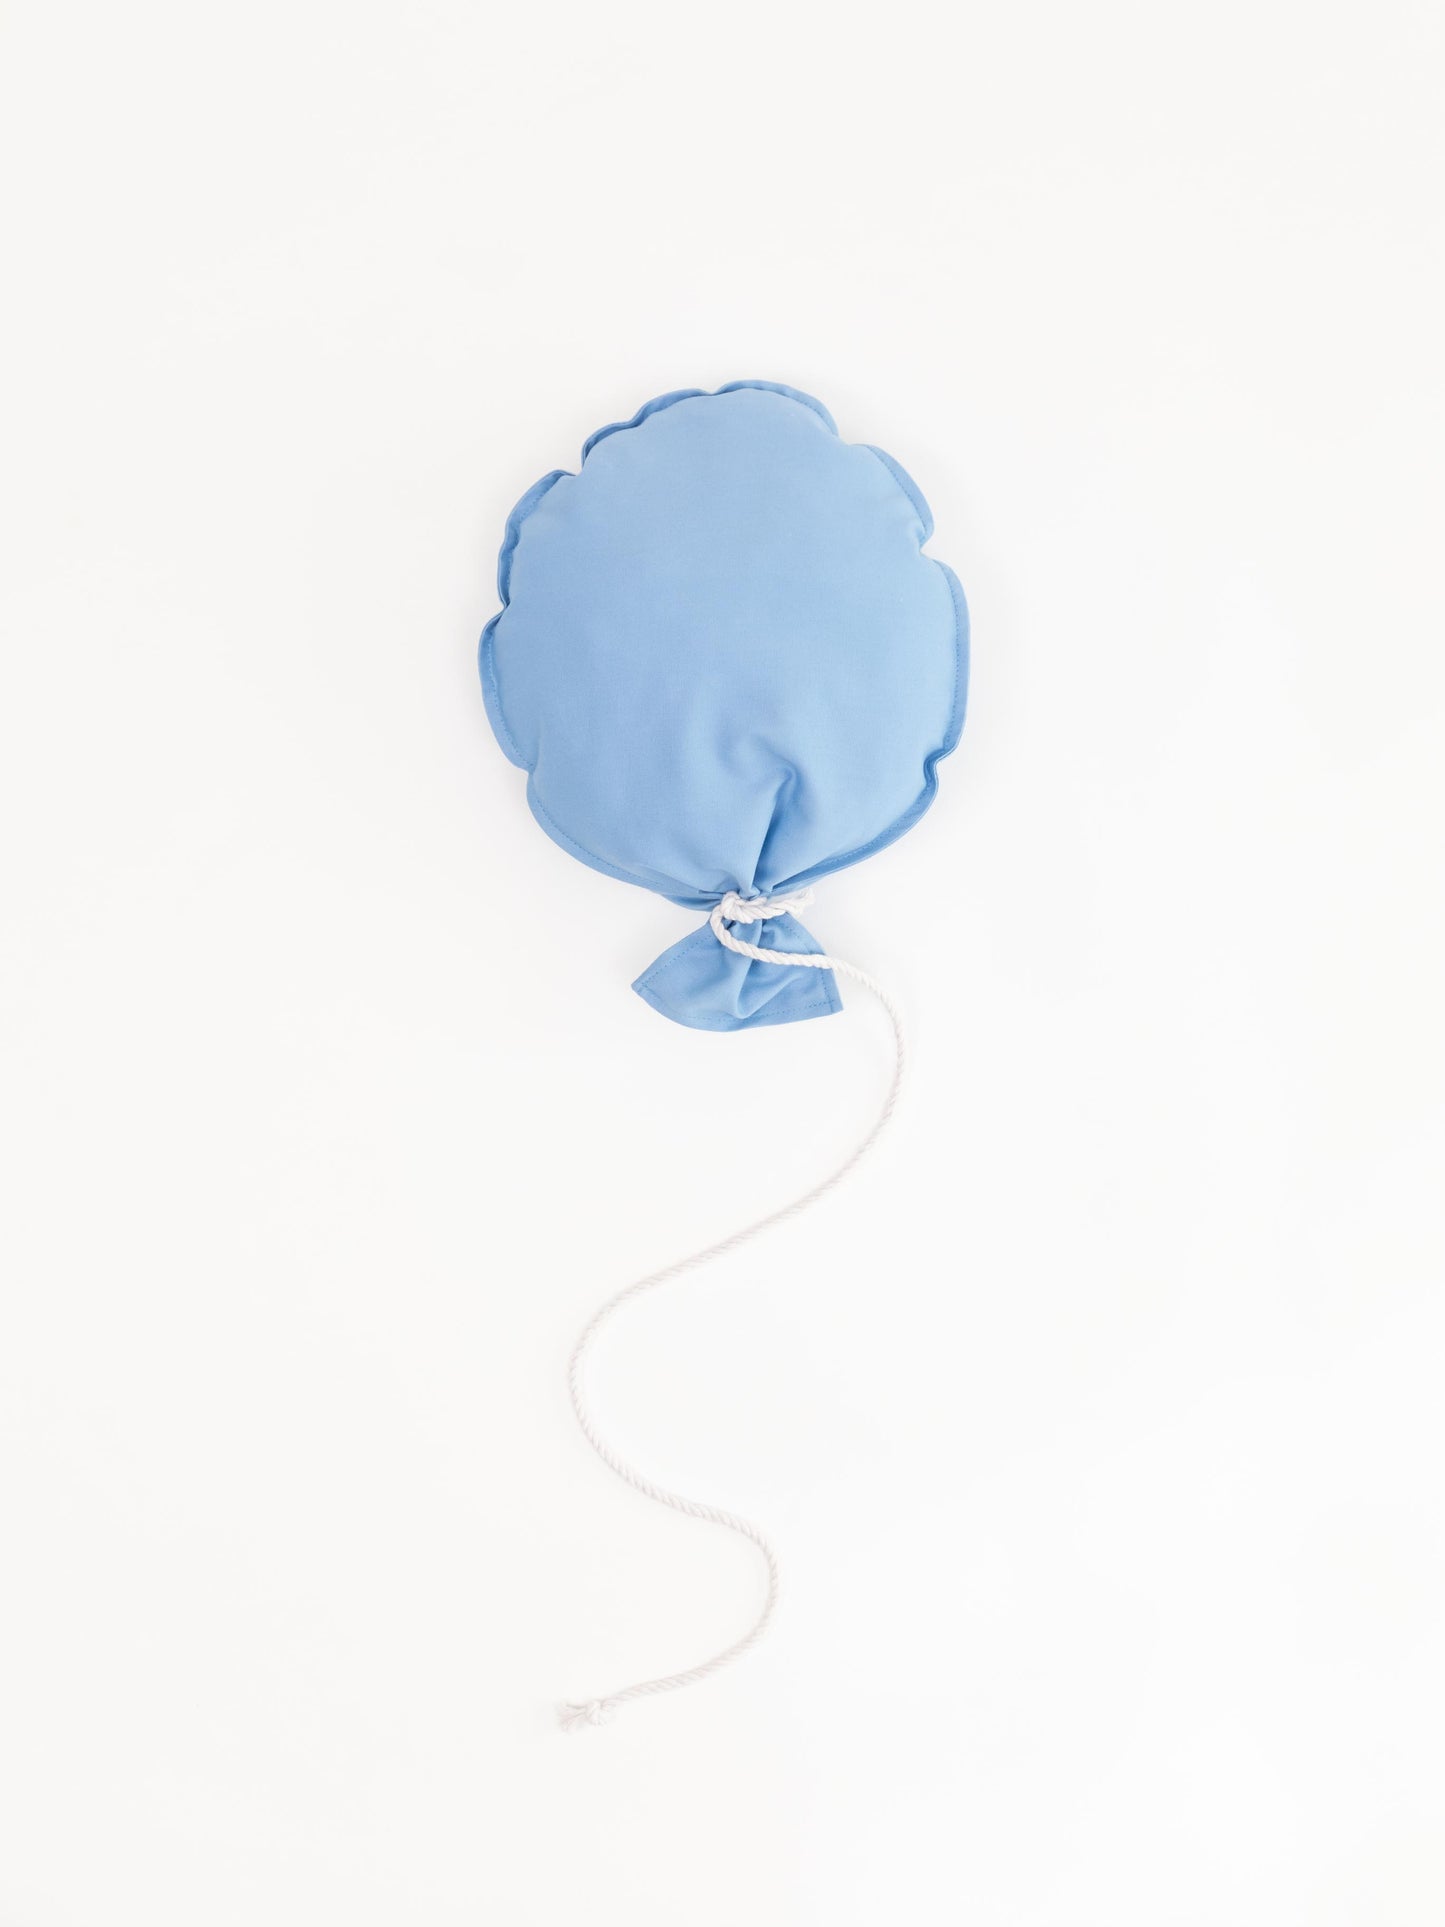 Kinderzimmer Wanddeko 'Stoff-Luftballon' Hellblau handmade